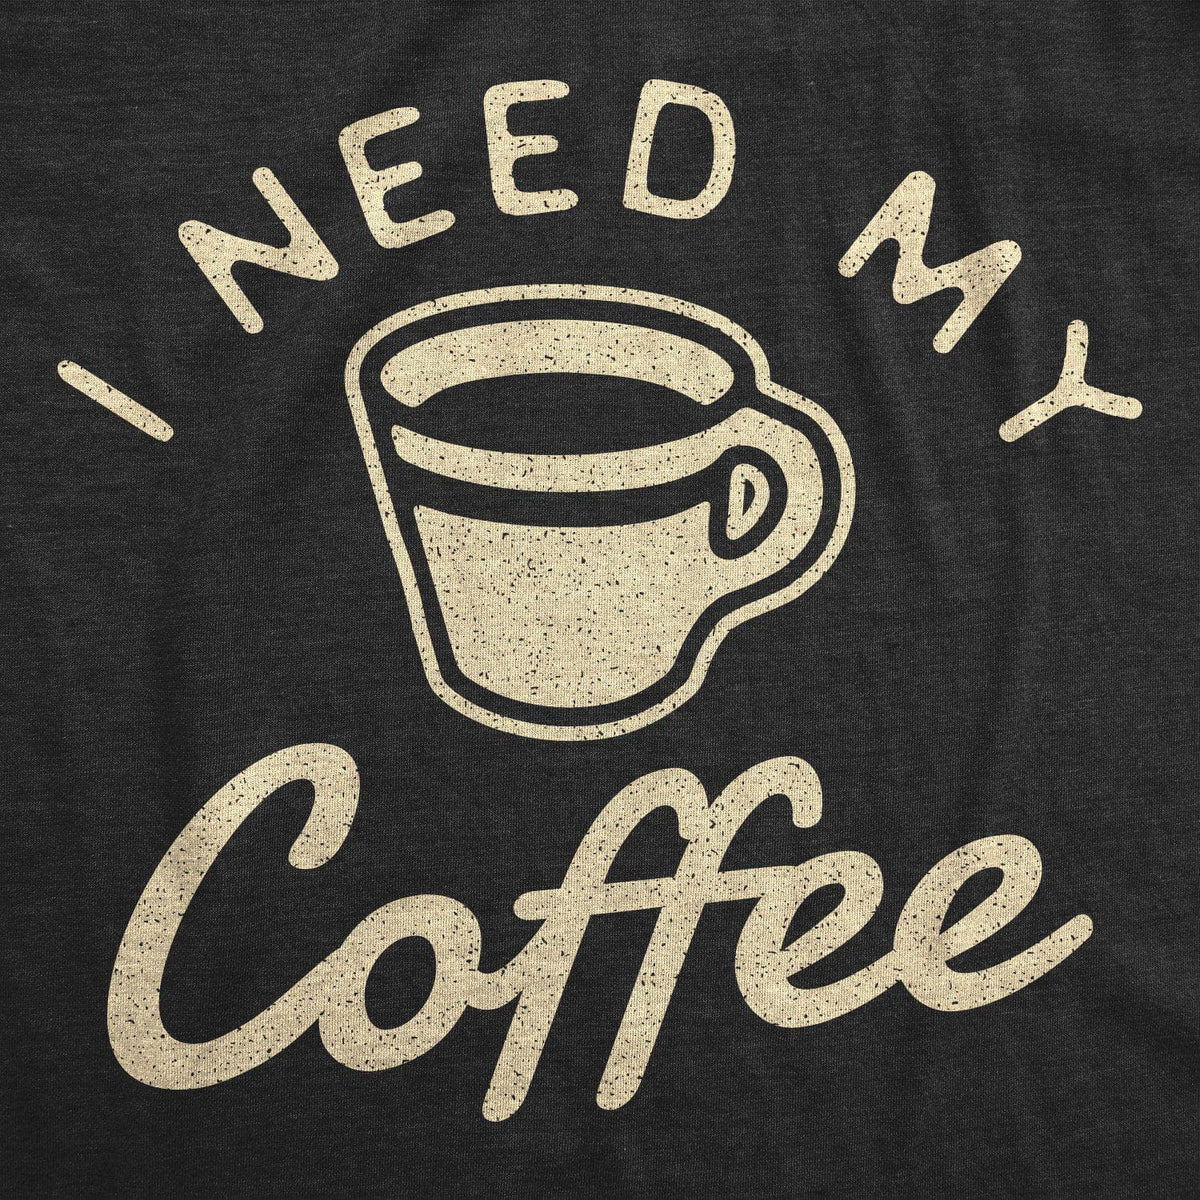 I Need My Coffee Men&#39;s Tshirt - Crazy Dog T-Shirts